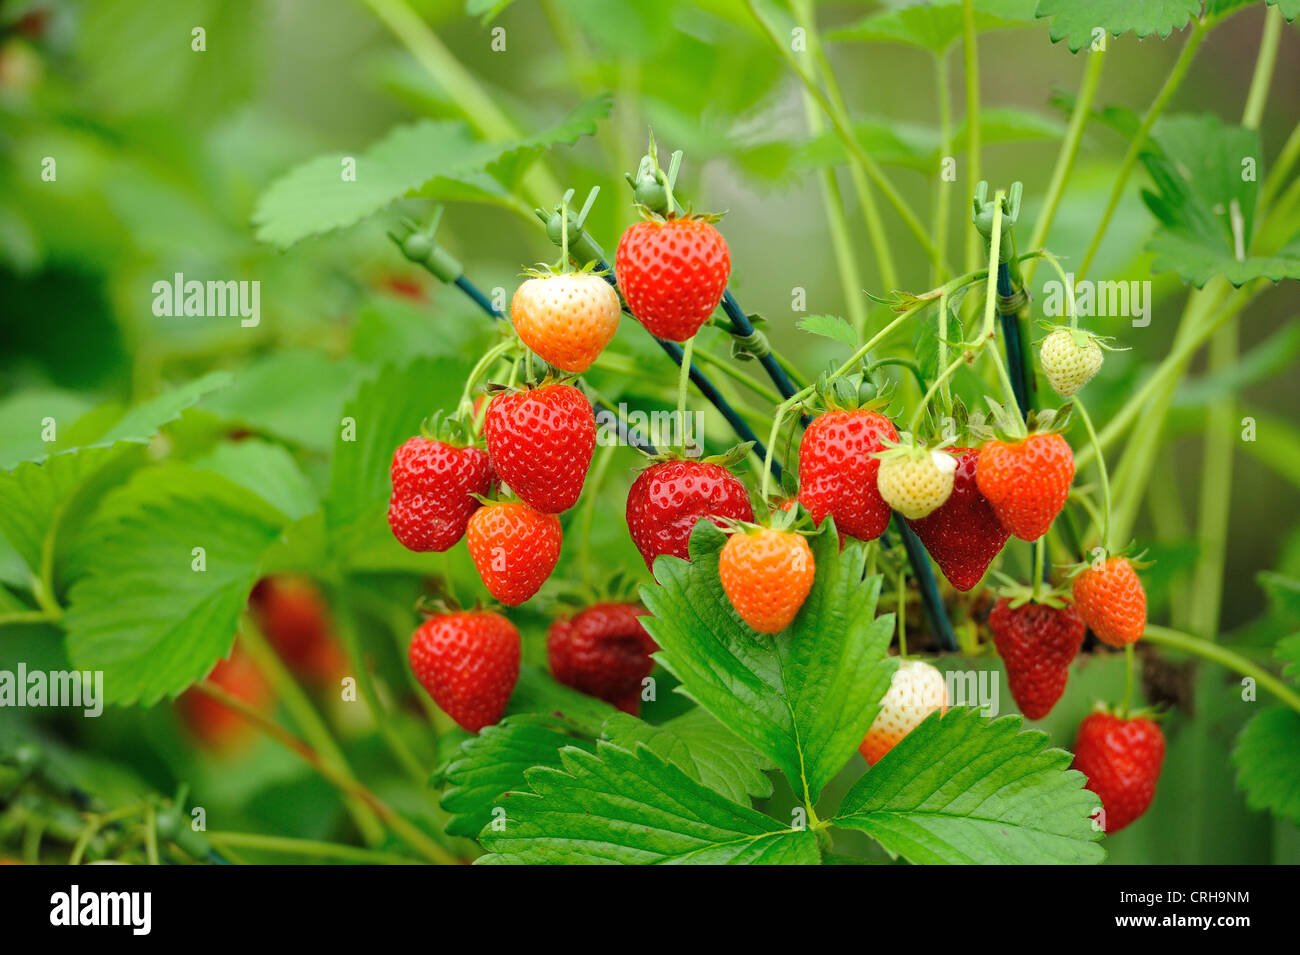 Planta de fresas fotografías e imágenes de alta resolución - Alamy